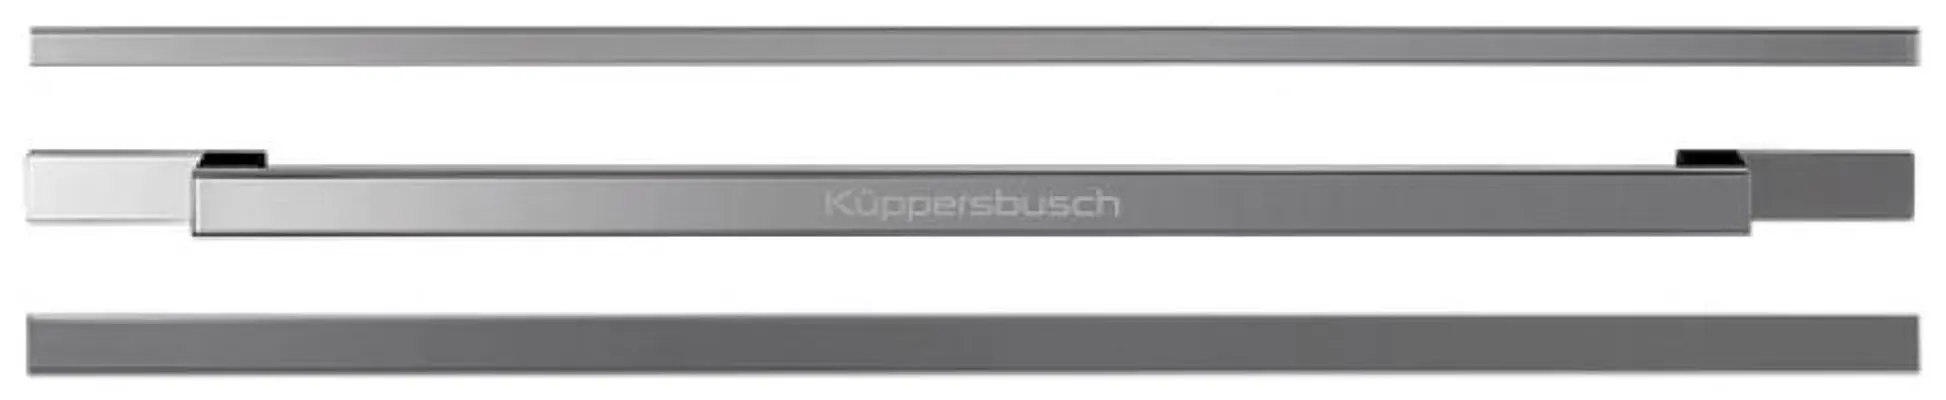 DK3003-Kuppersbusch-Koel-vries-accessoires